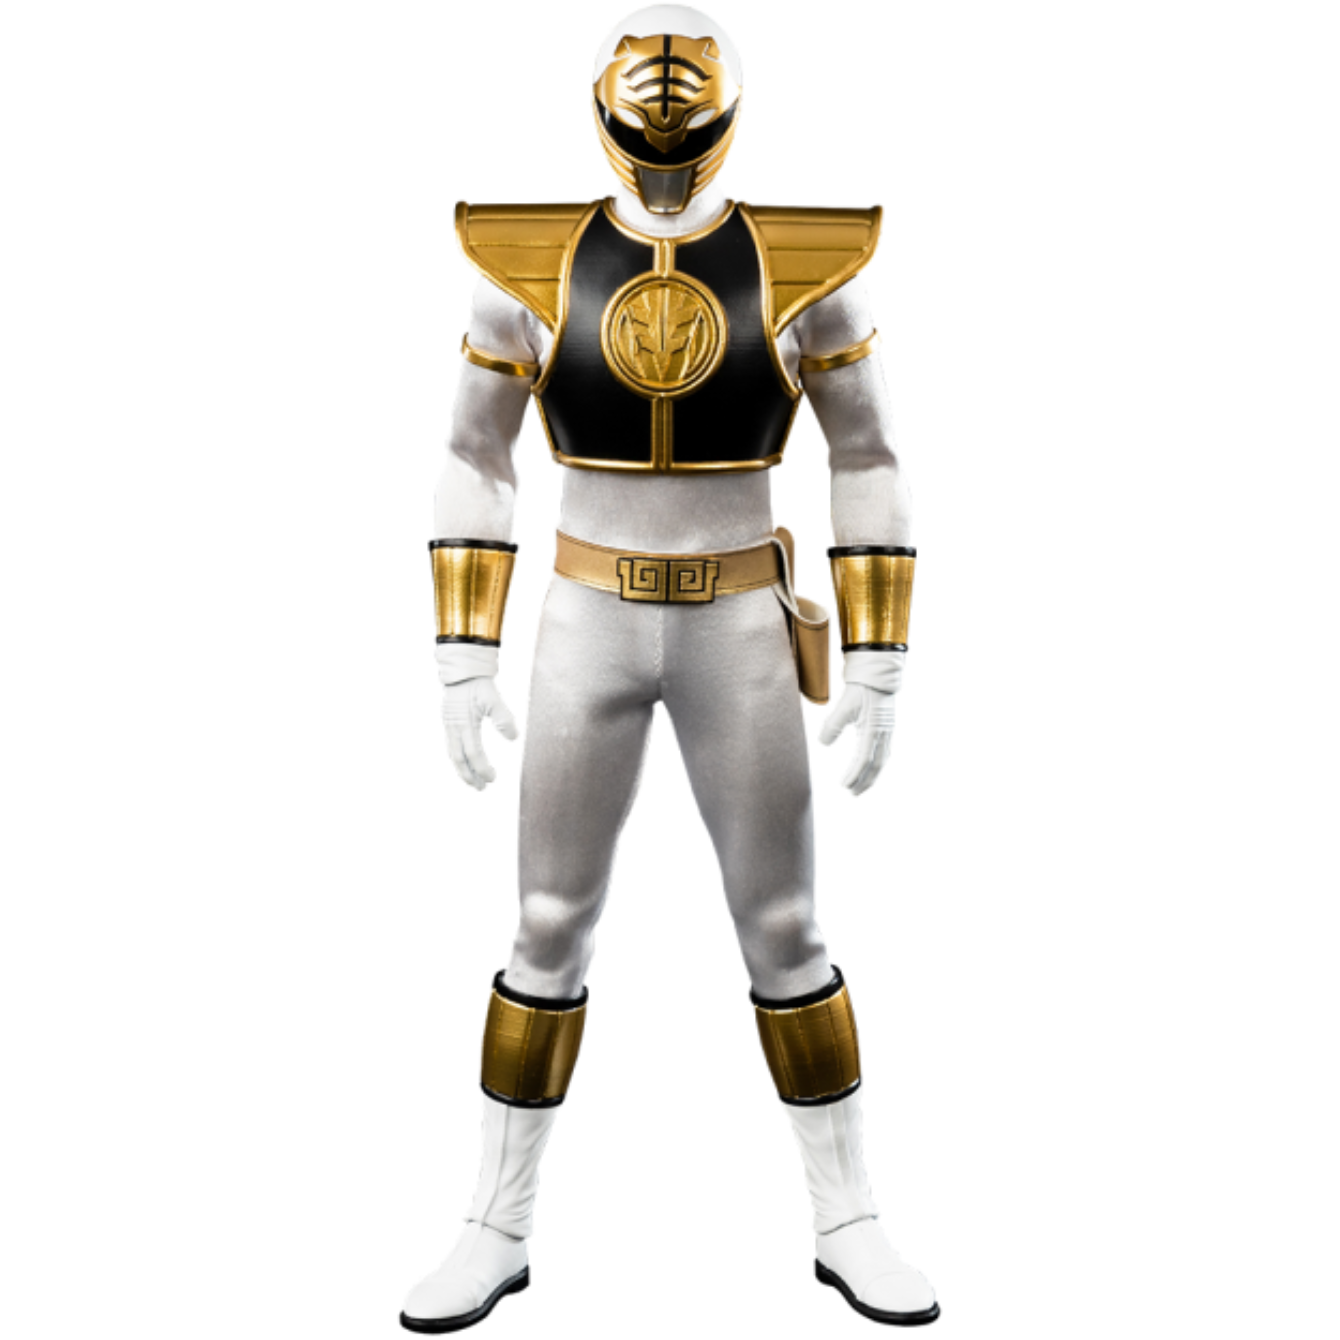 PRE-ORDER Mighty Morphin Power Rangers White Ranger 1:6 Scale